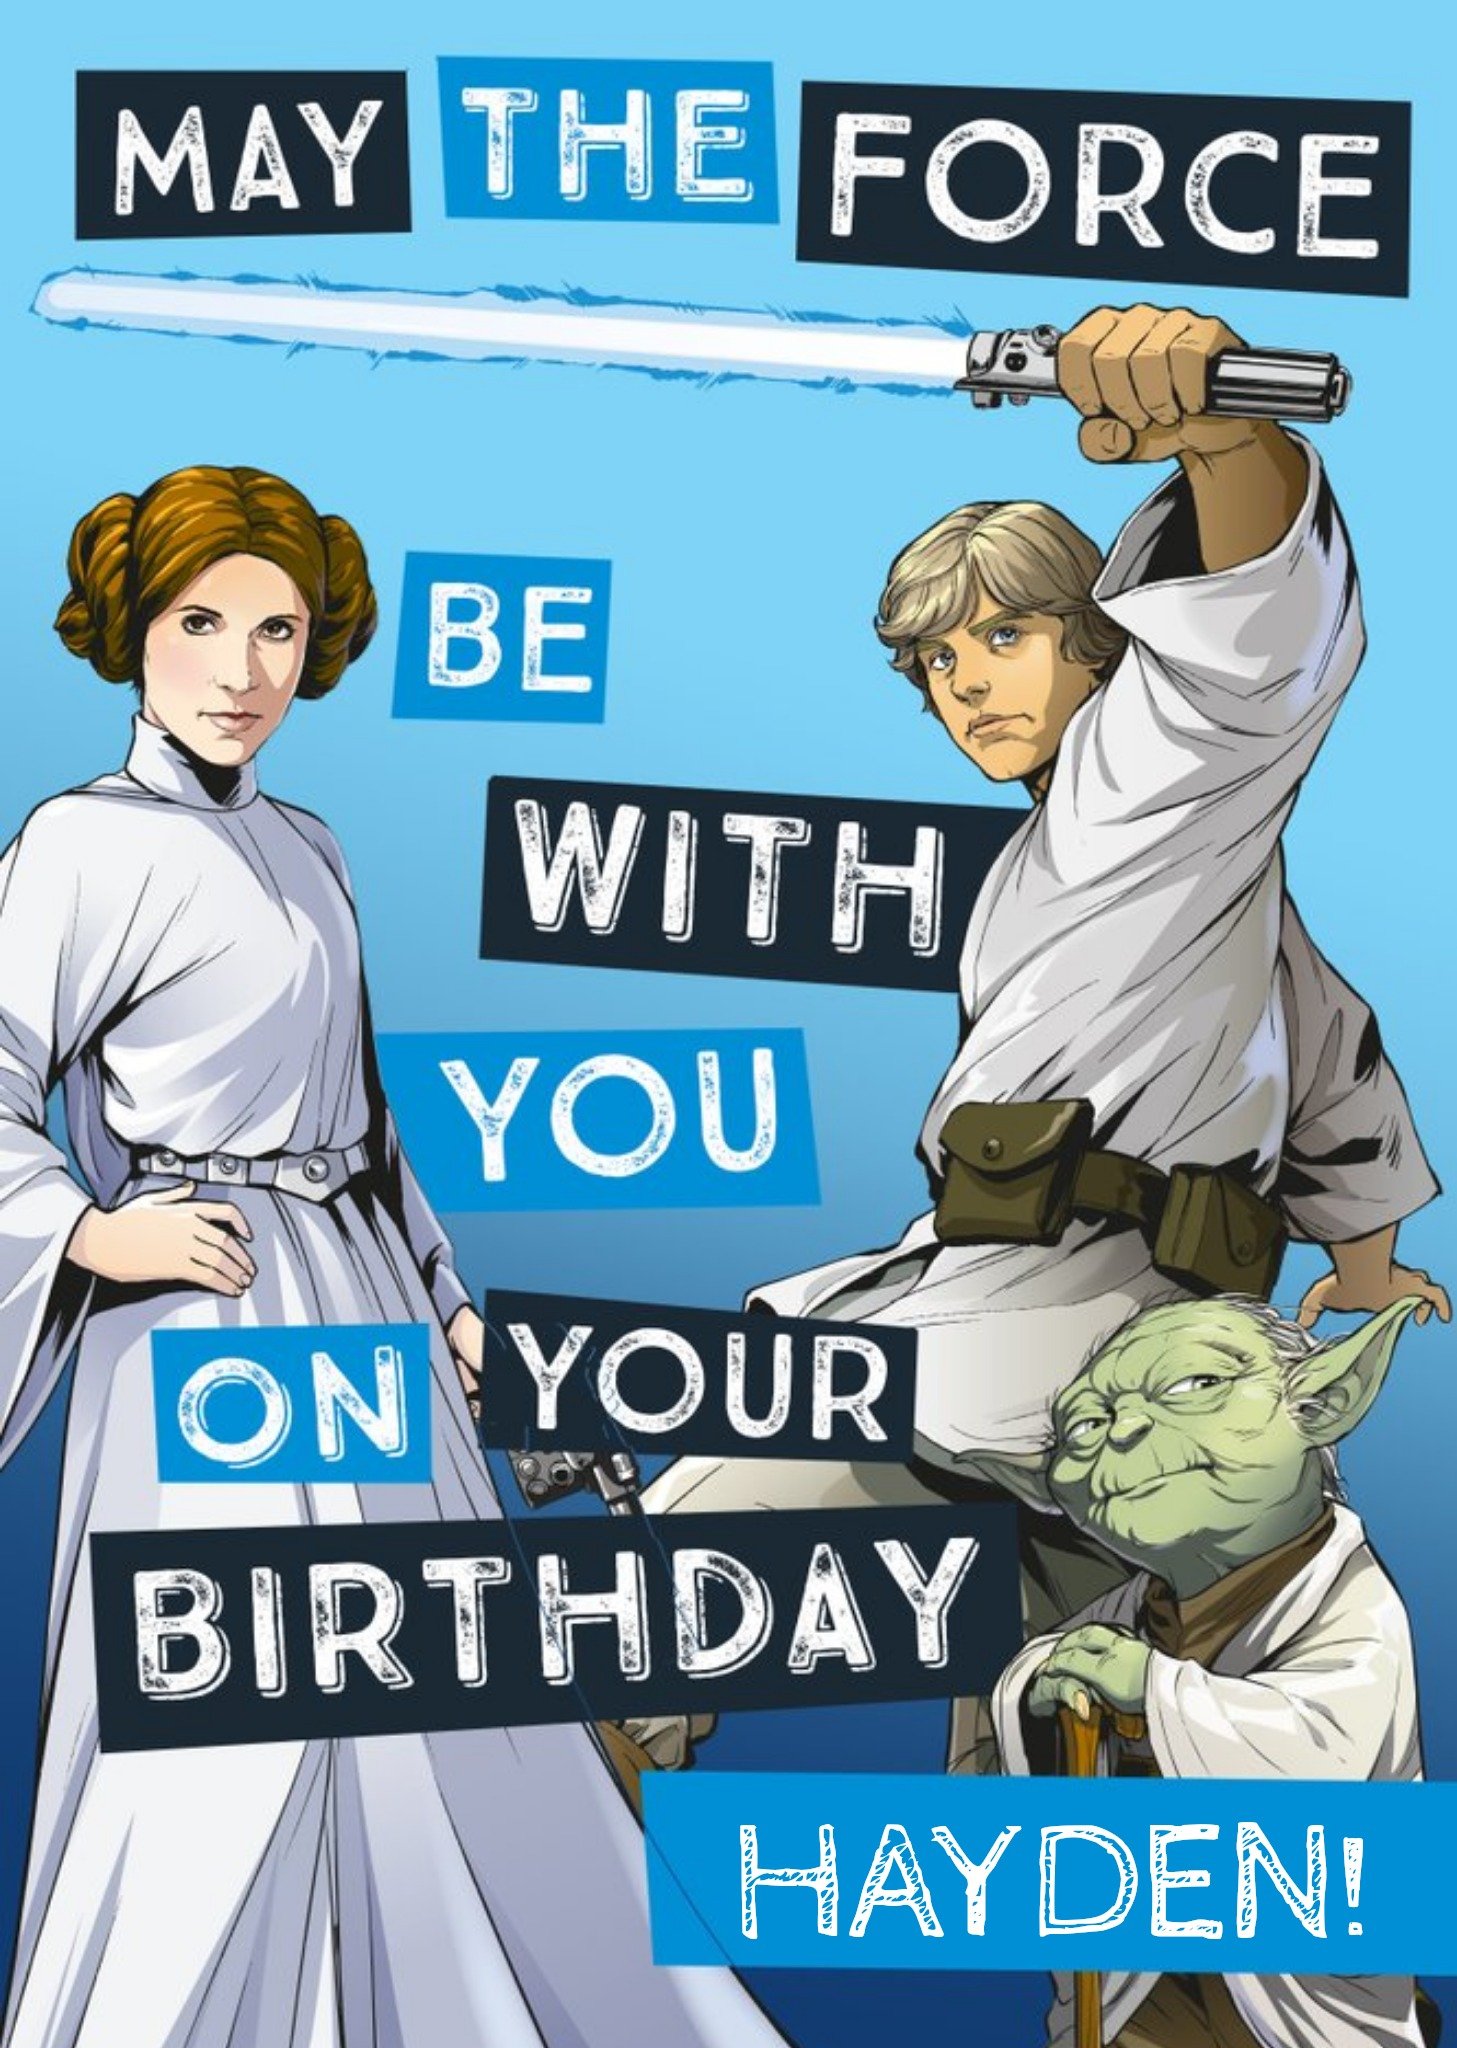 Disney Star Wars Birthday Card - Princess Leia - Luke Skywalker - Yoda, Large